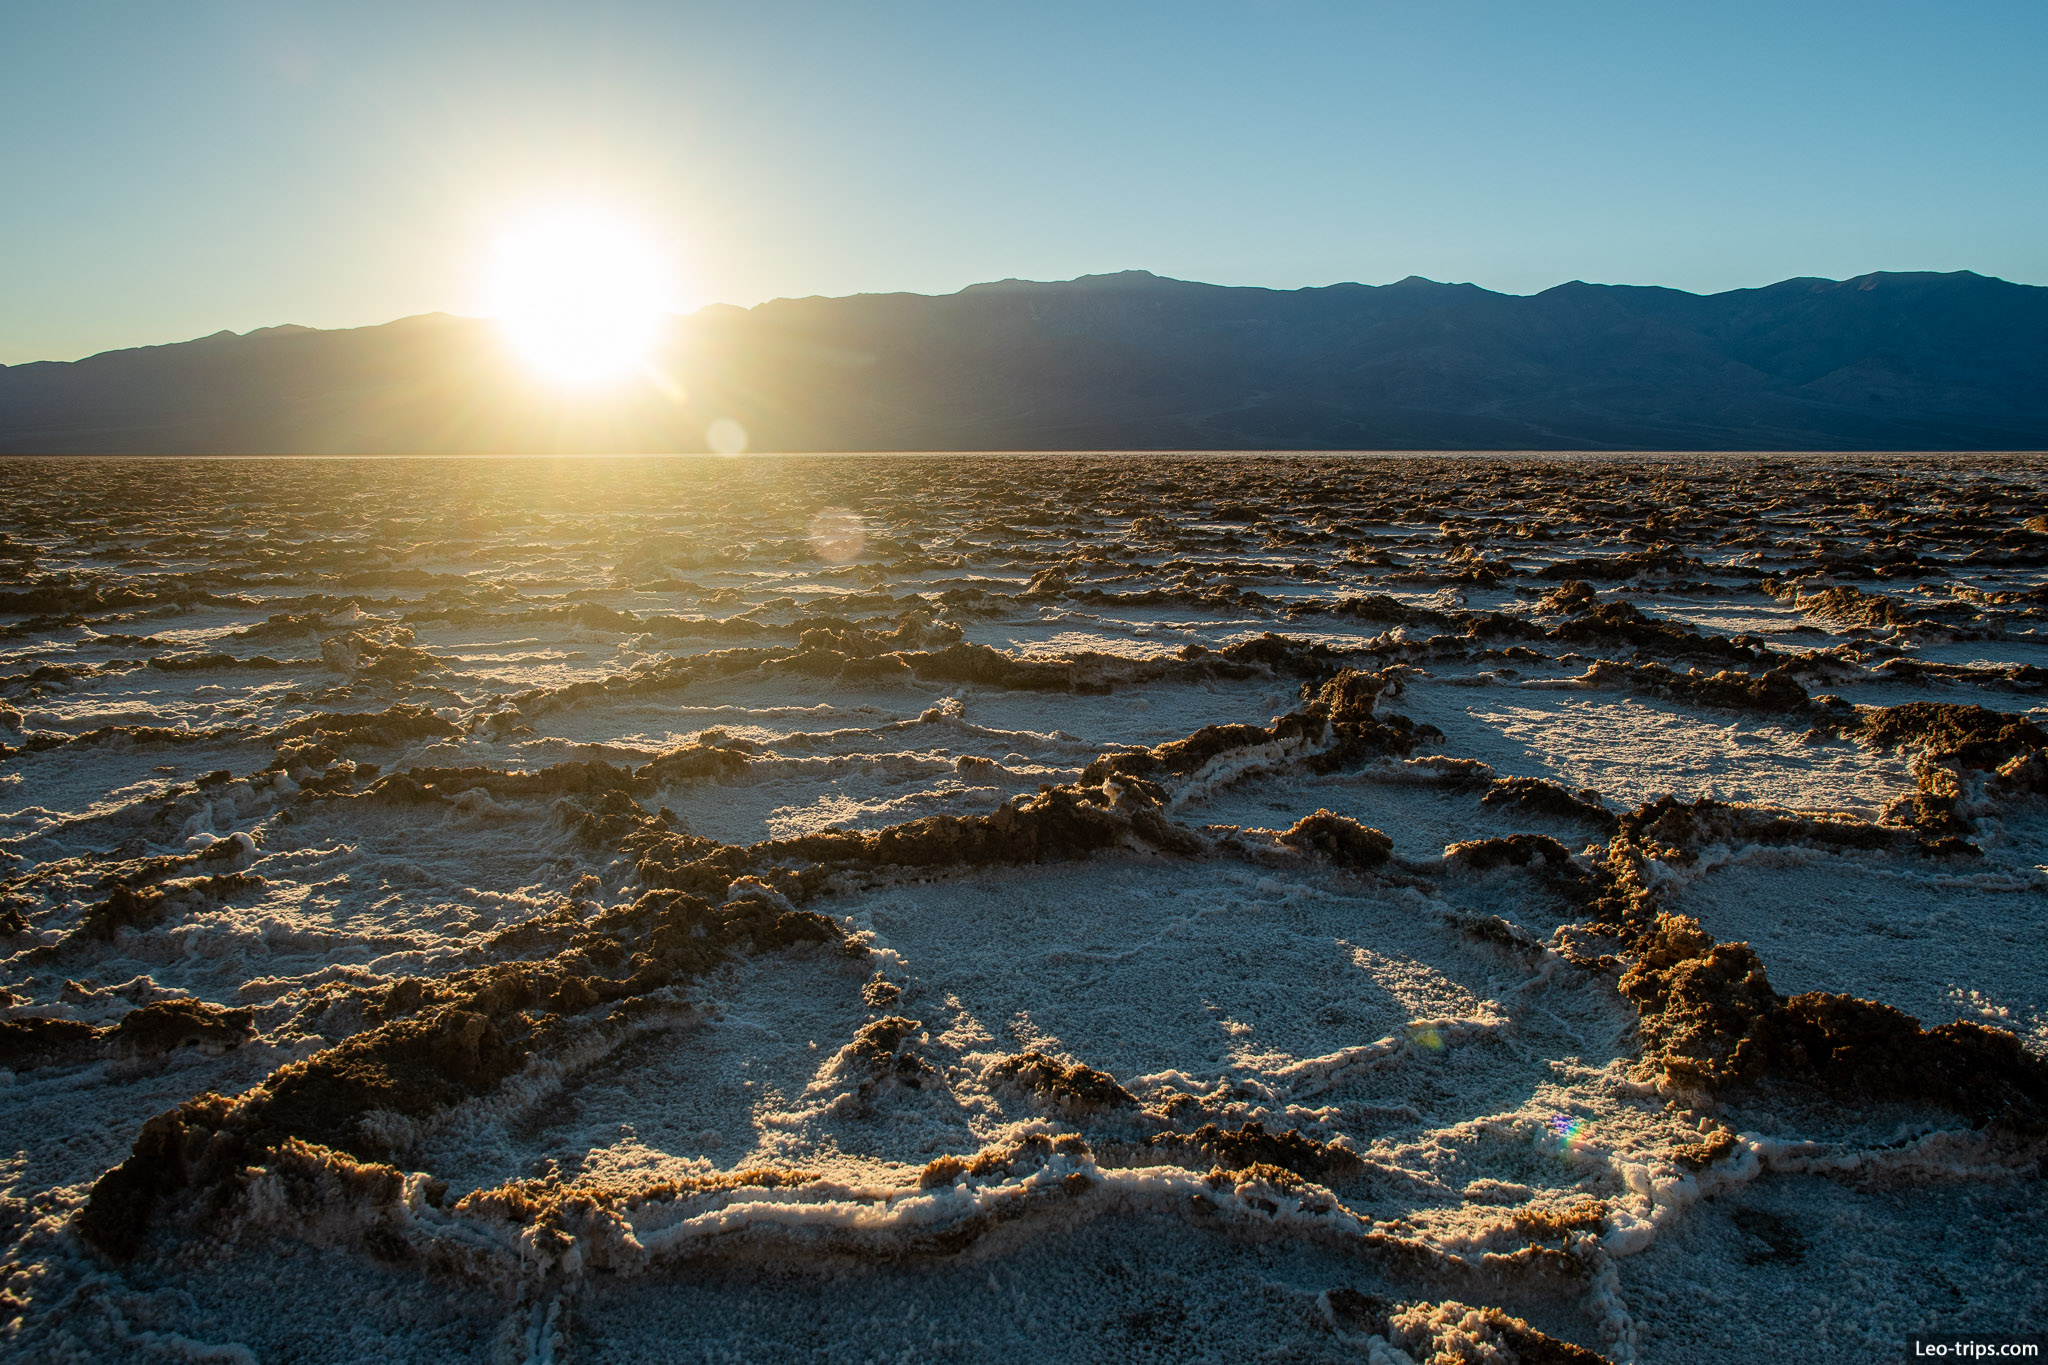 hexagons on salt pan at sunset death valley national park